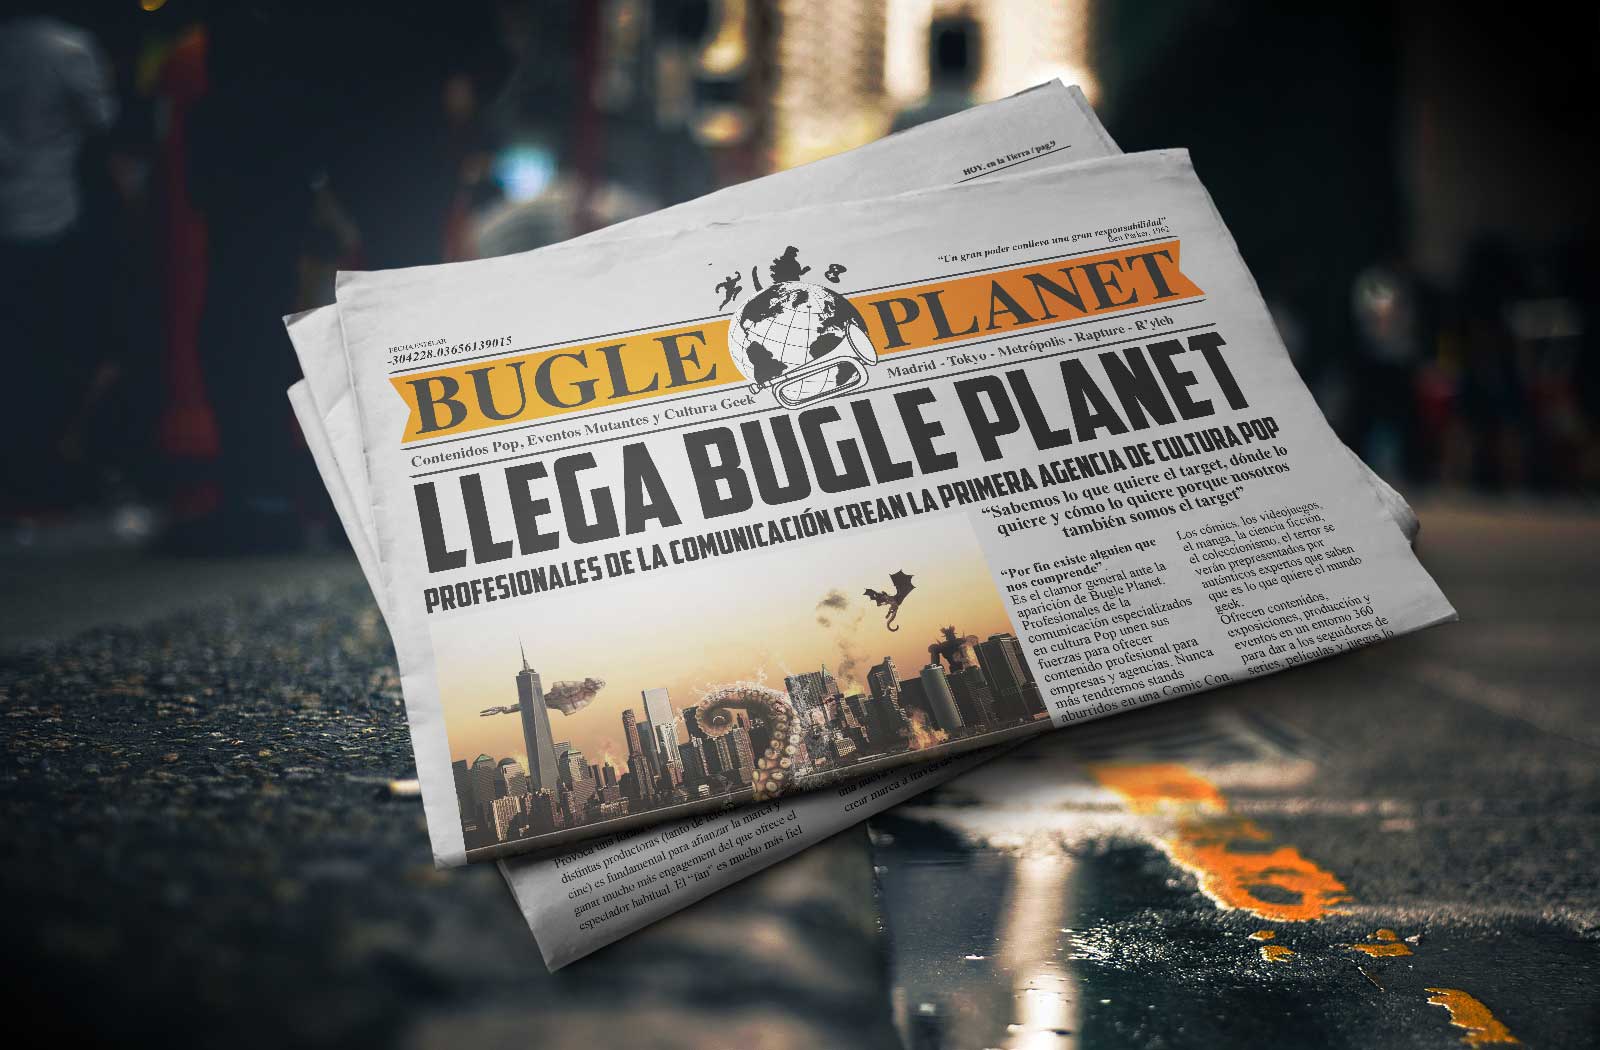 (c) Bugleplanet.com